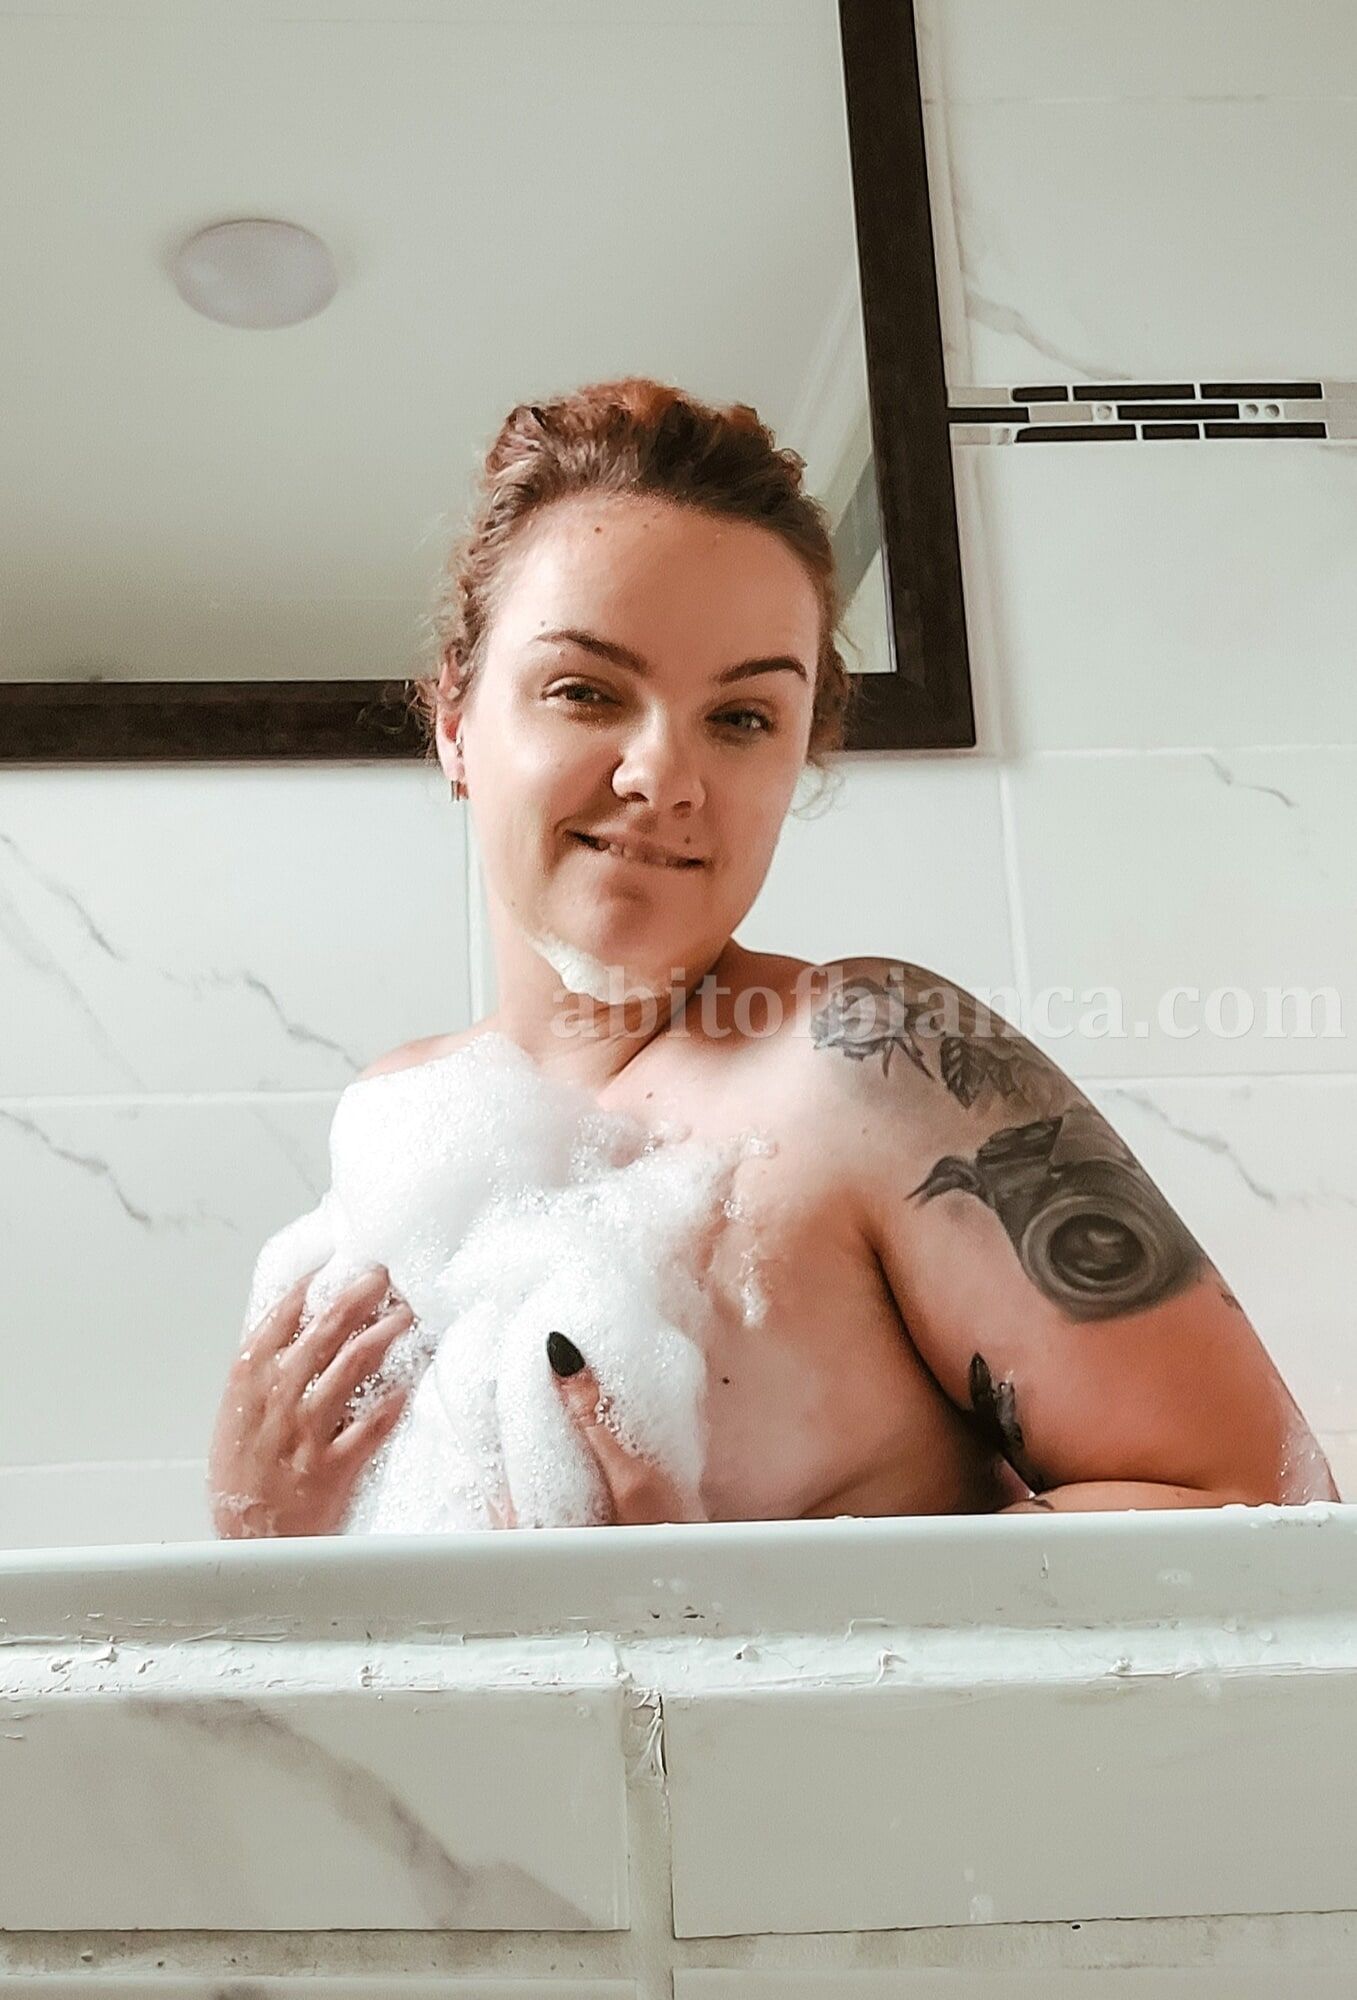 ABitofBianca hot tattooed redhead playing in a bubble bath #2